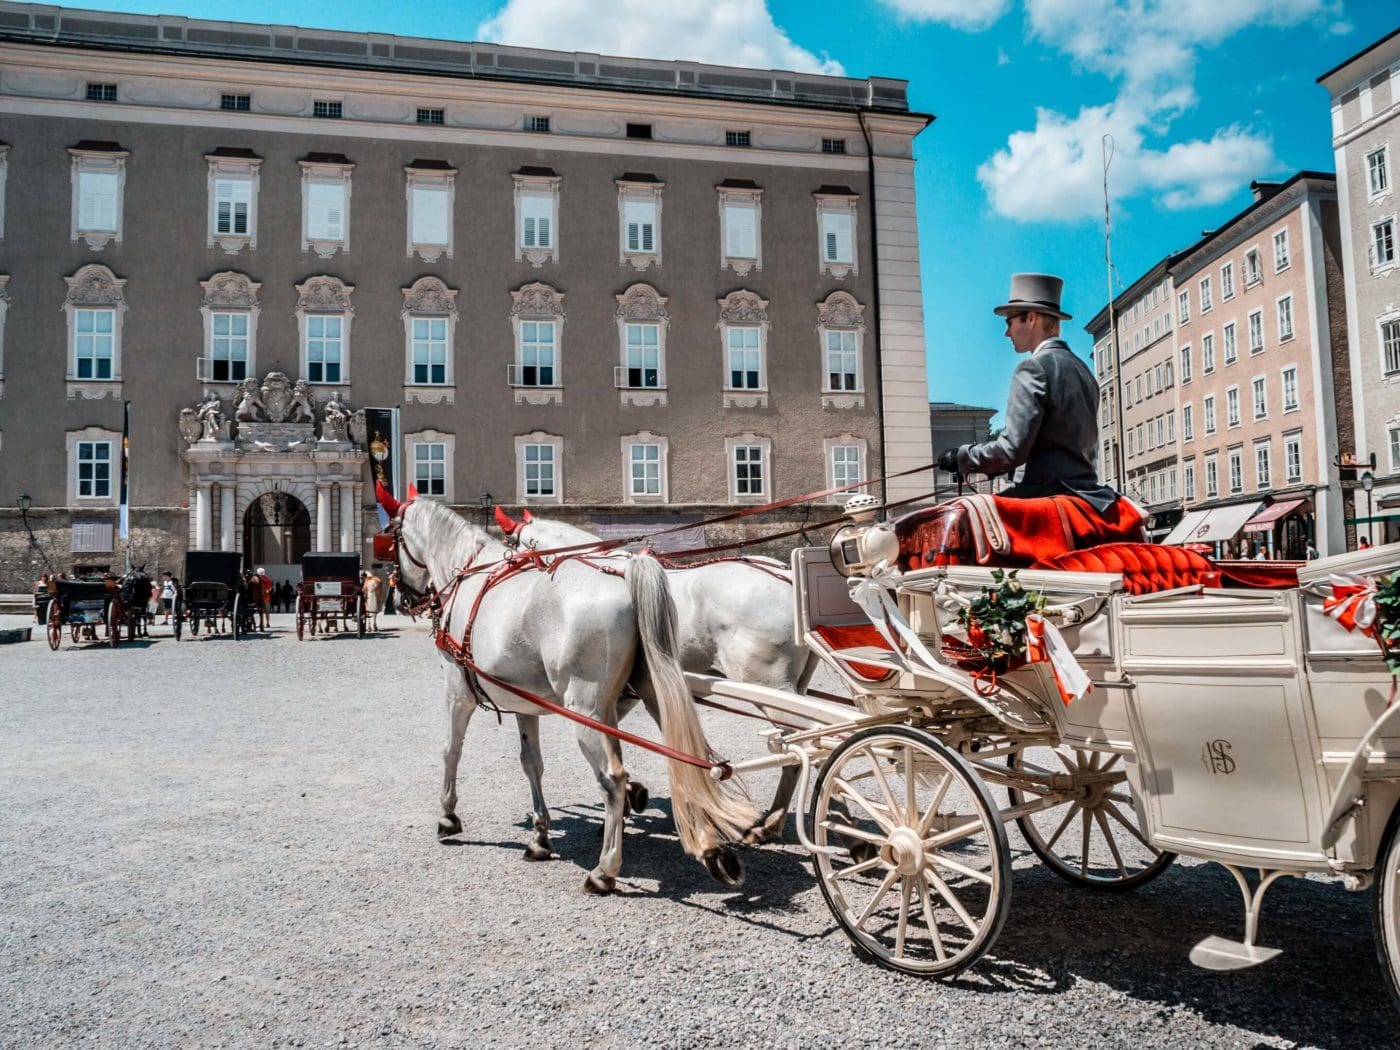 Postcard from Austria: Carriage Ride in Salzburg